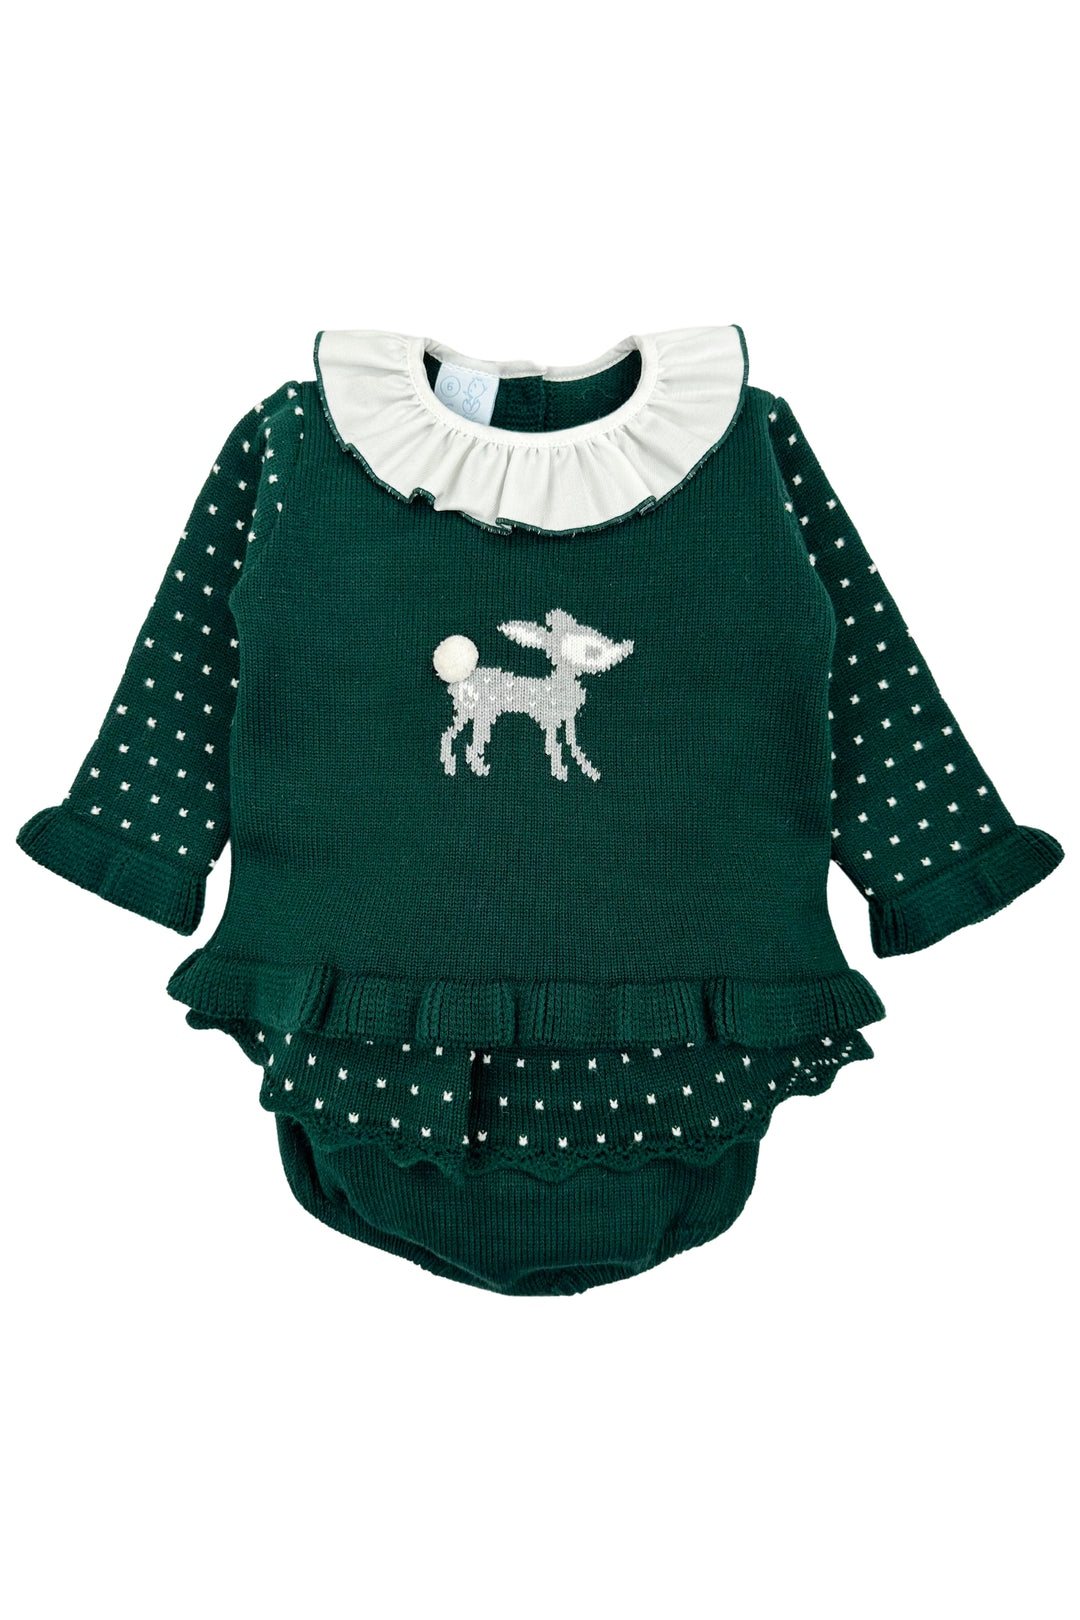 Granlei "Juno" Bottle Green Knit Top & Bloomers | Millie and John